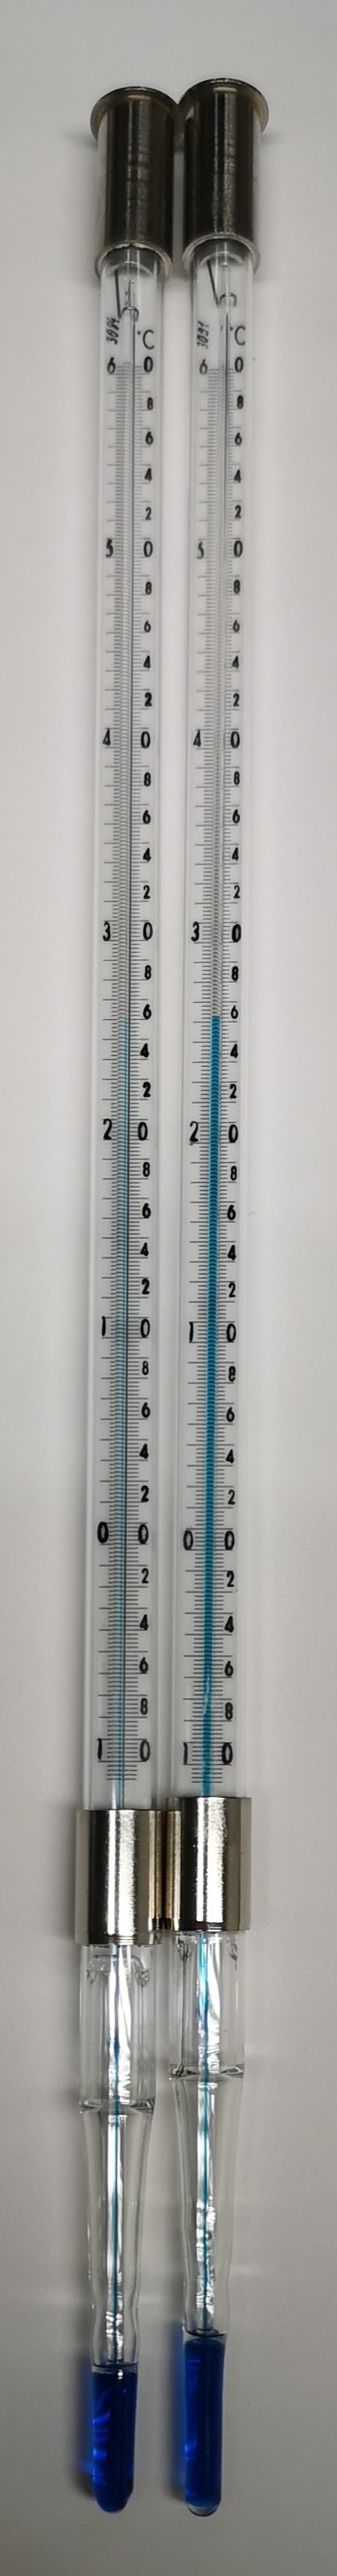 Assmann Psychrometer Thermometer